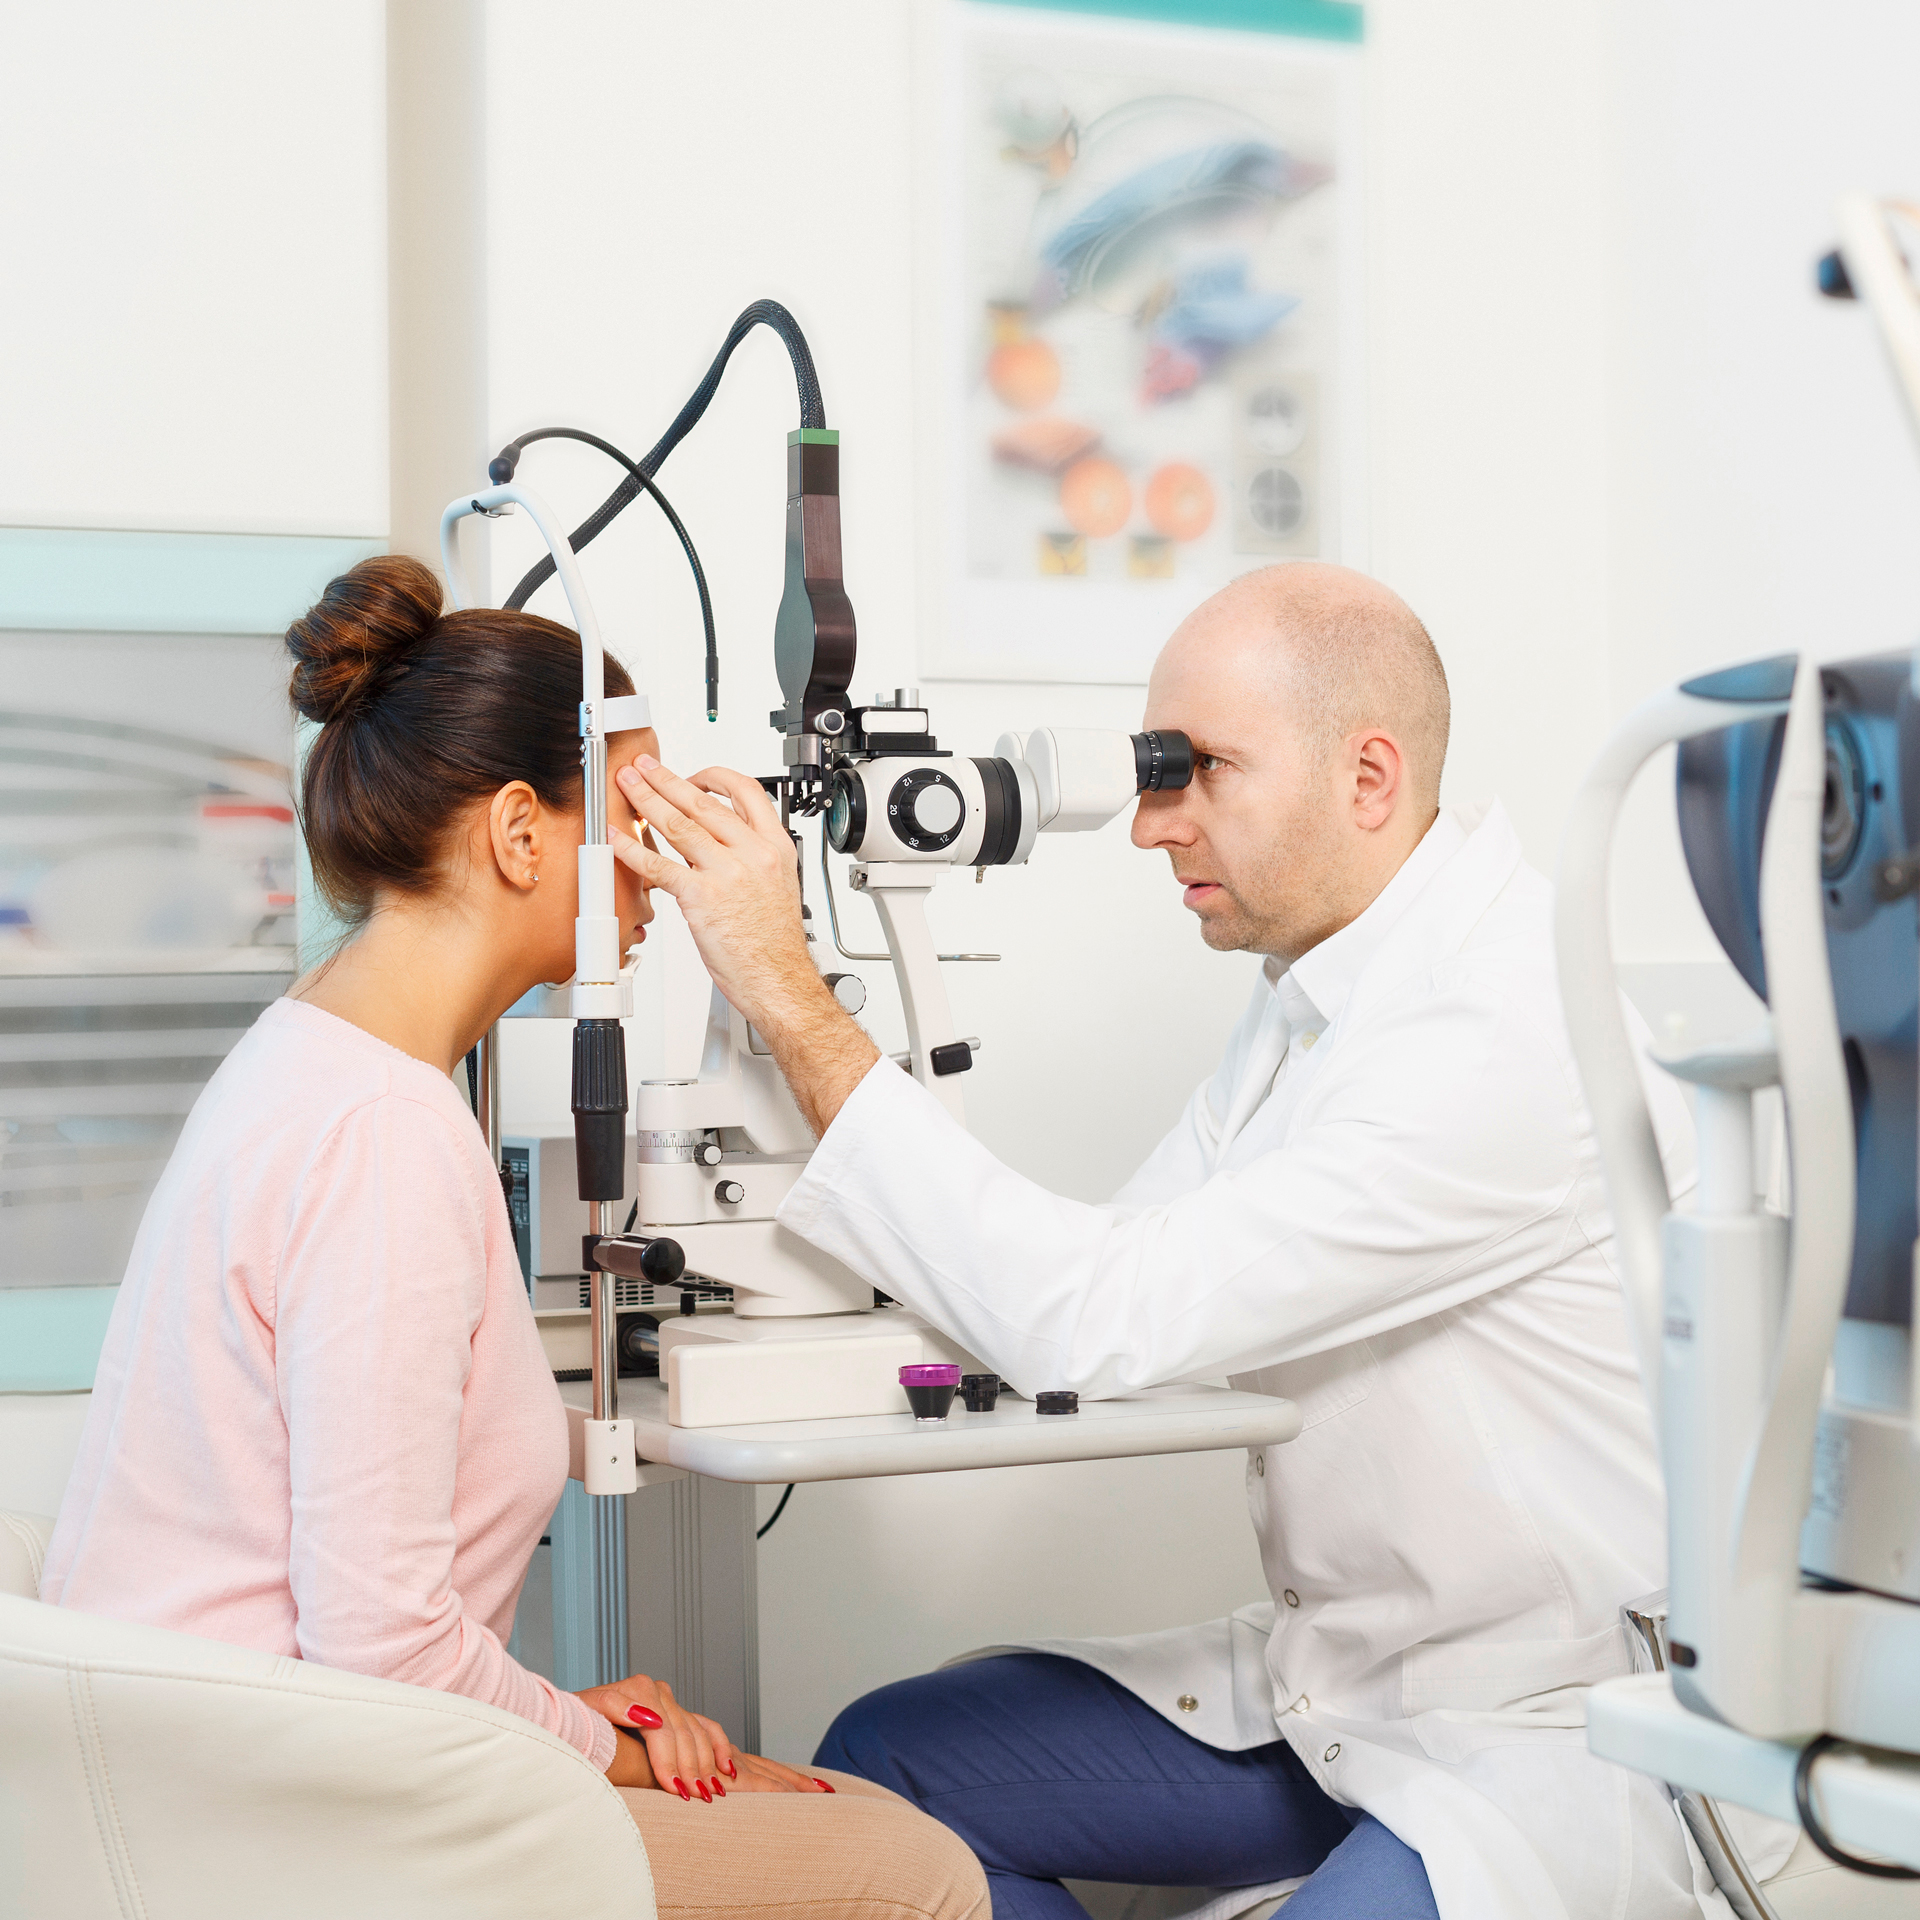 Laser eye surgery clinical trials